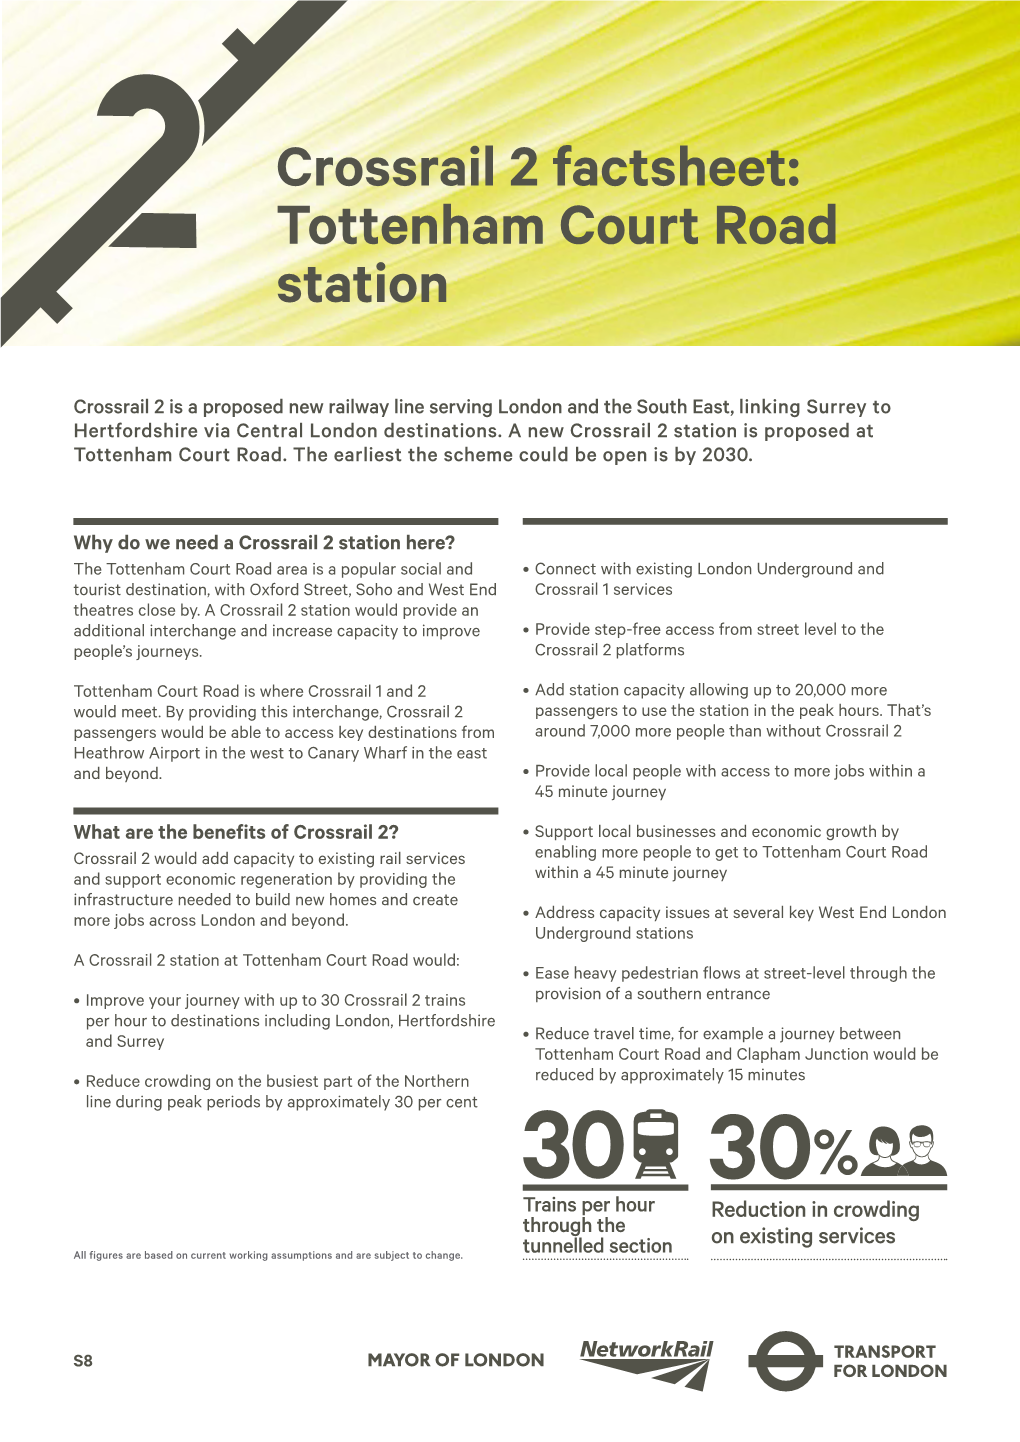 Crossrail 2 Factsheet: Tottenham Court Road Station